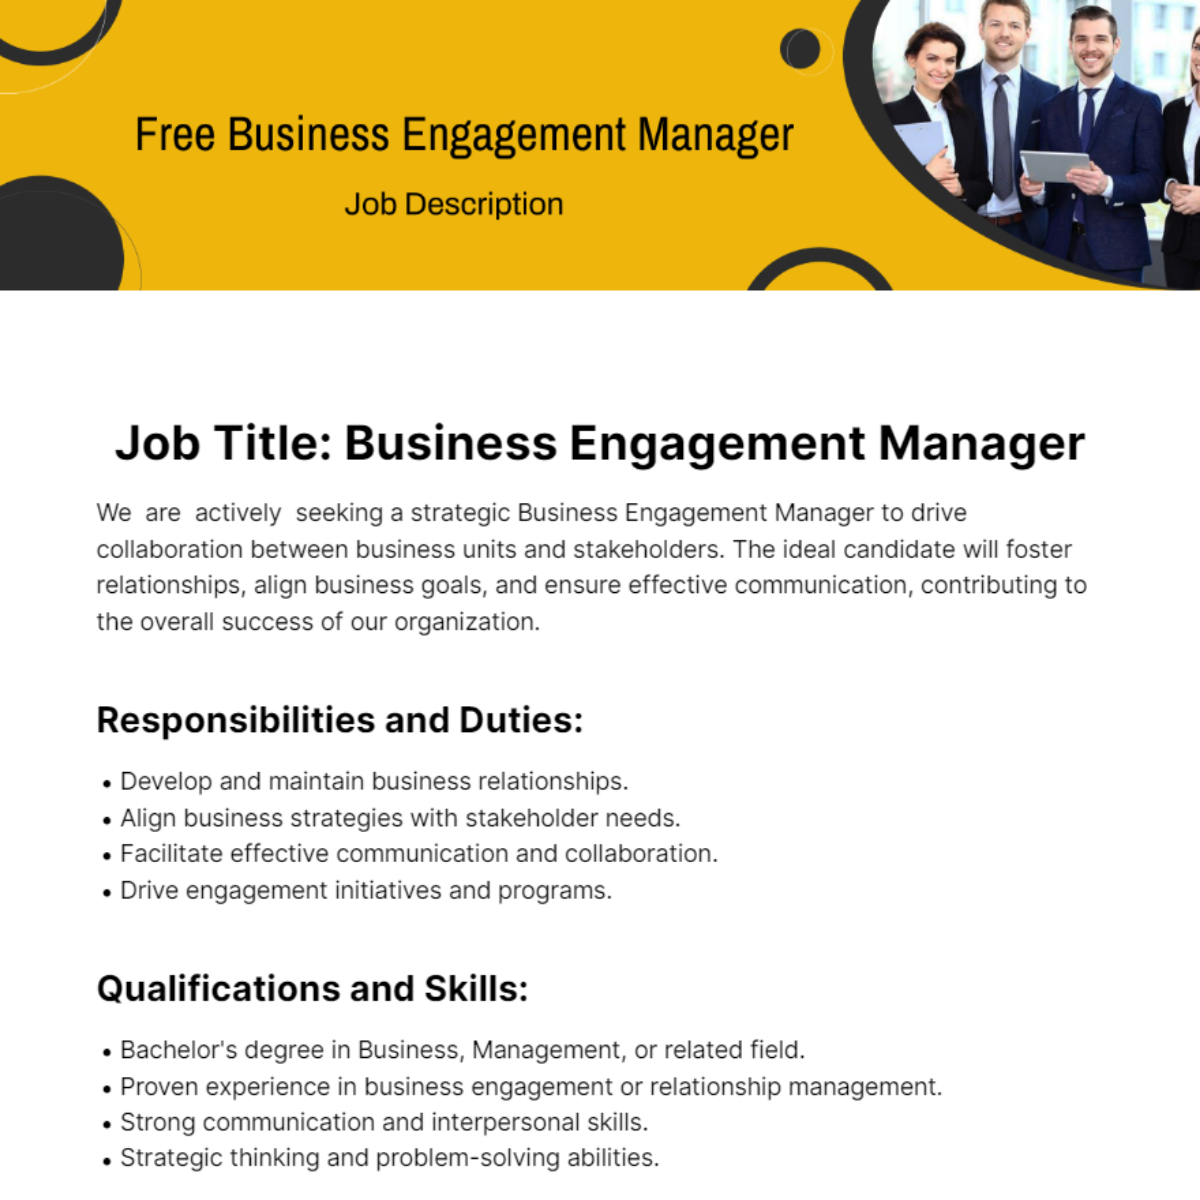 Free Business Engagement Manager Job Description Template